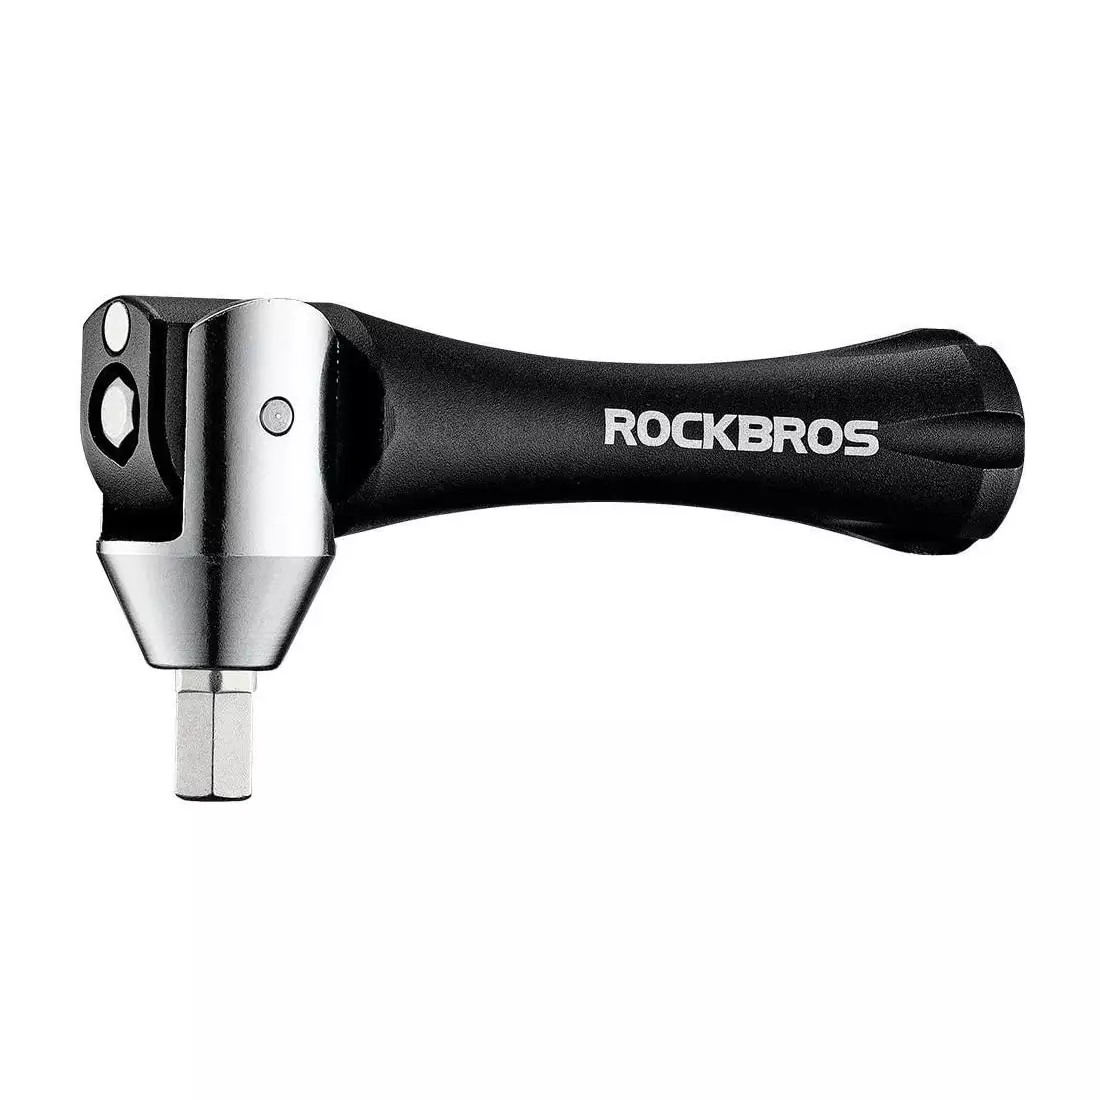 Rockbros bicycle tool 5 functions HDTL-01